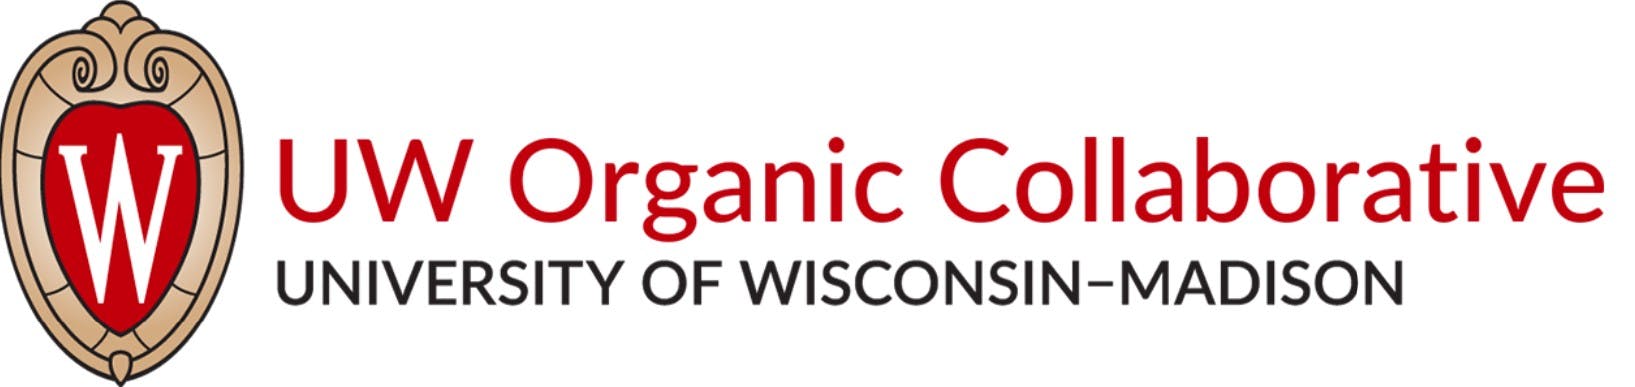 UW Organic Collaborative